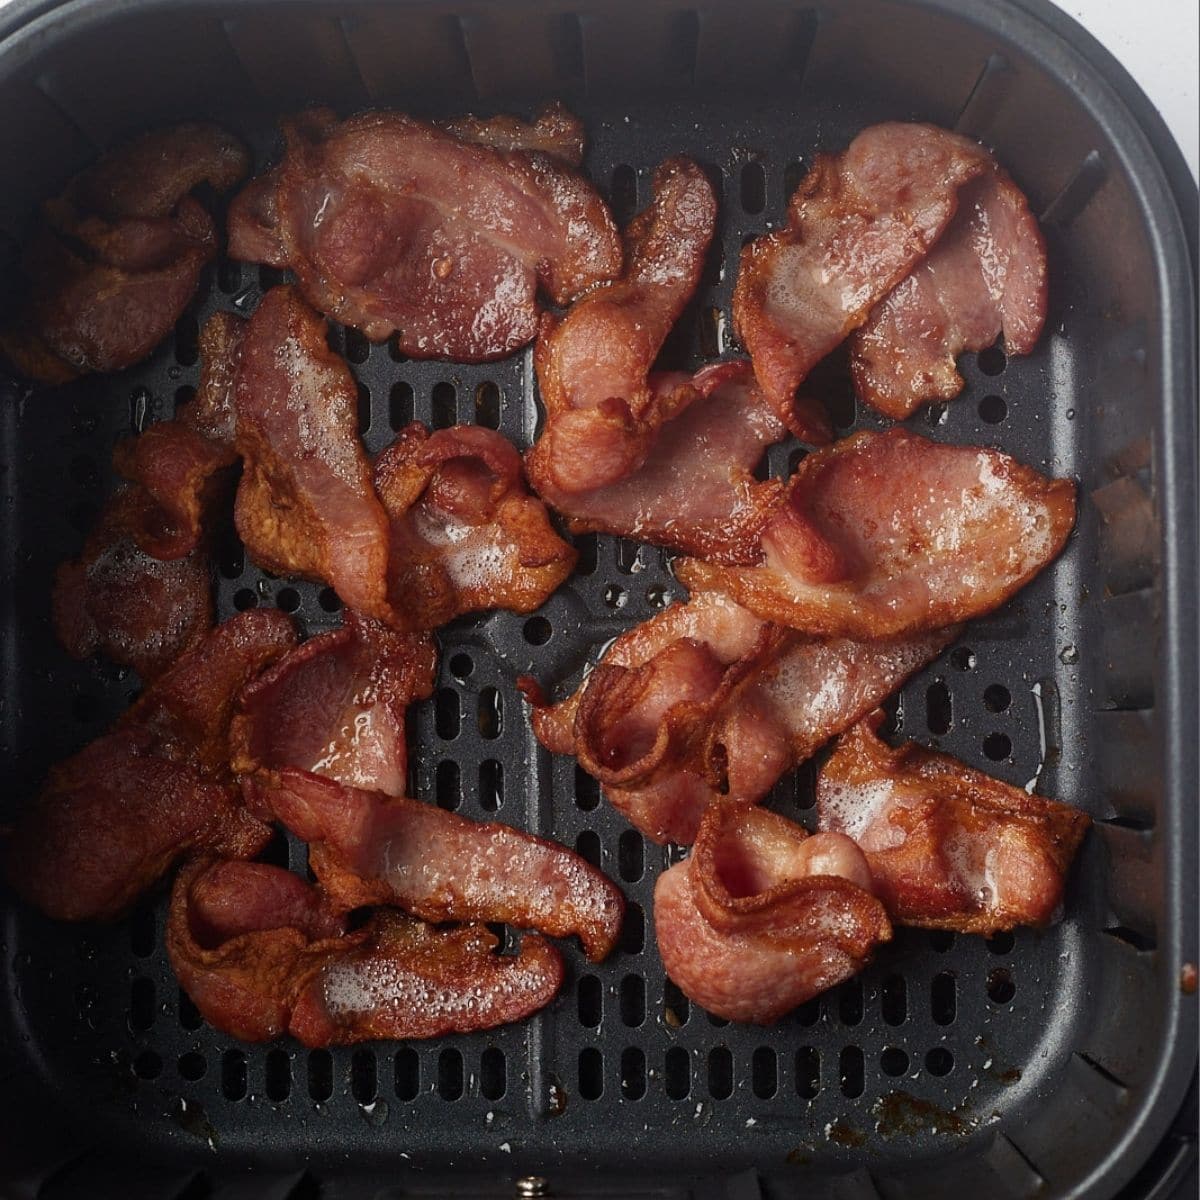 https://www.myforkinglife.com/wp-content/uploads/2020/12/air-fryer-bacon-cropped-4.jpg